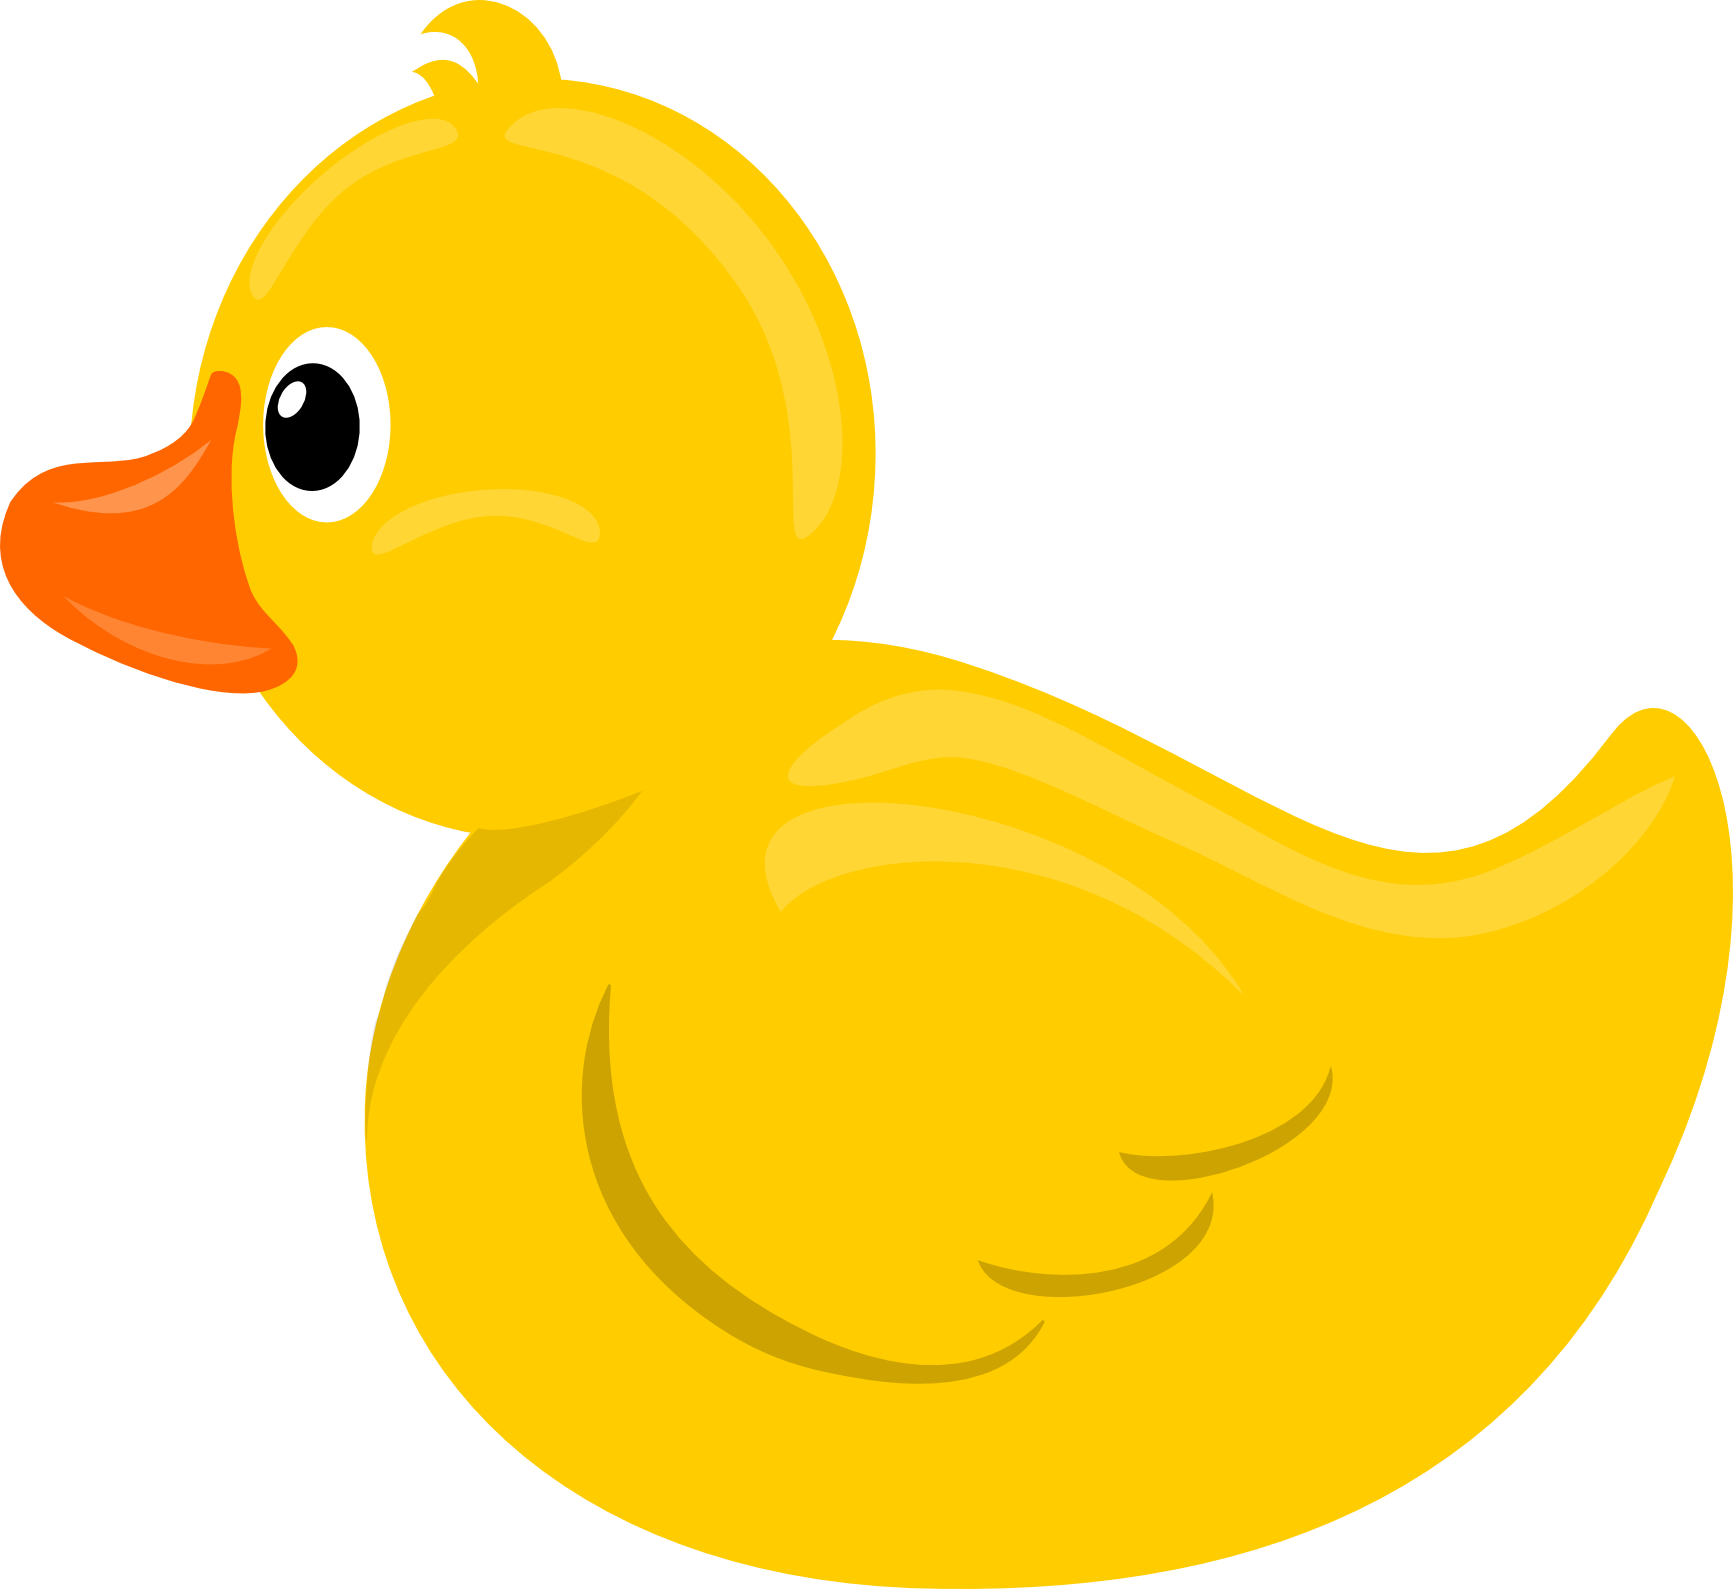 Rubber Ducky Clip Art - clipa - Rubber Ducky Clipart